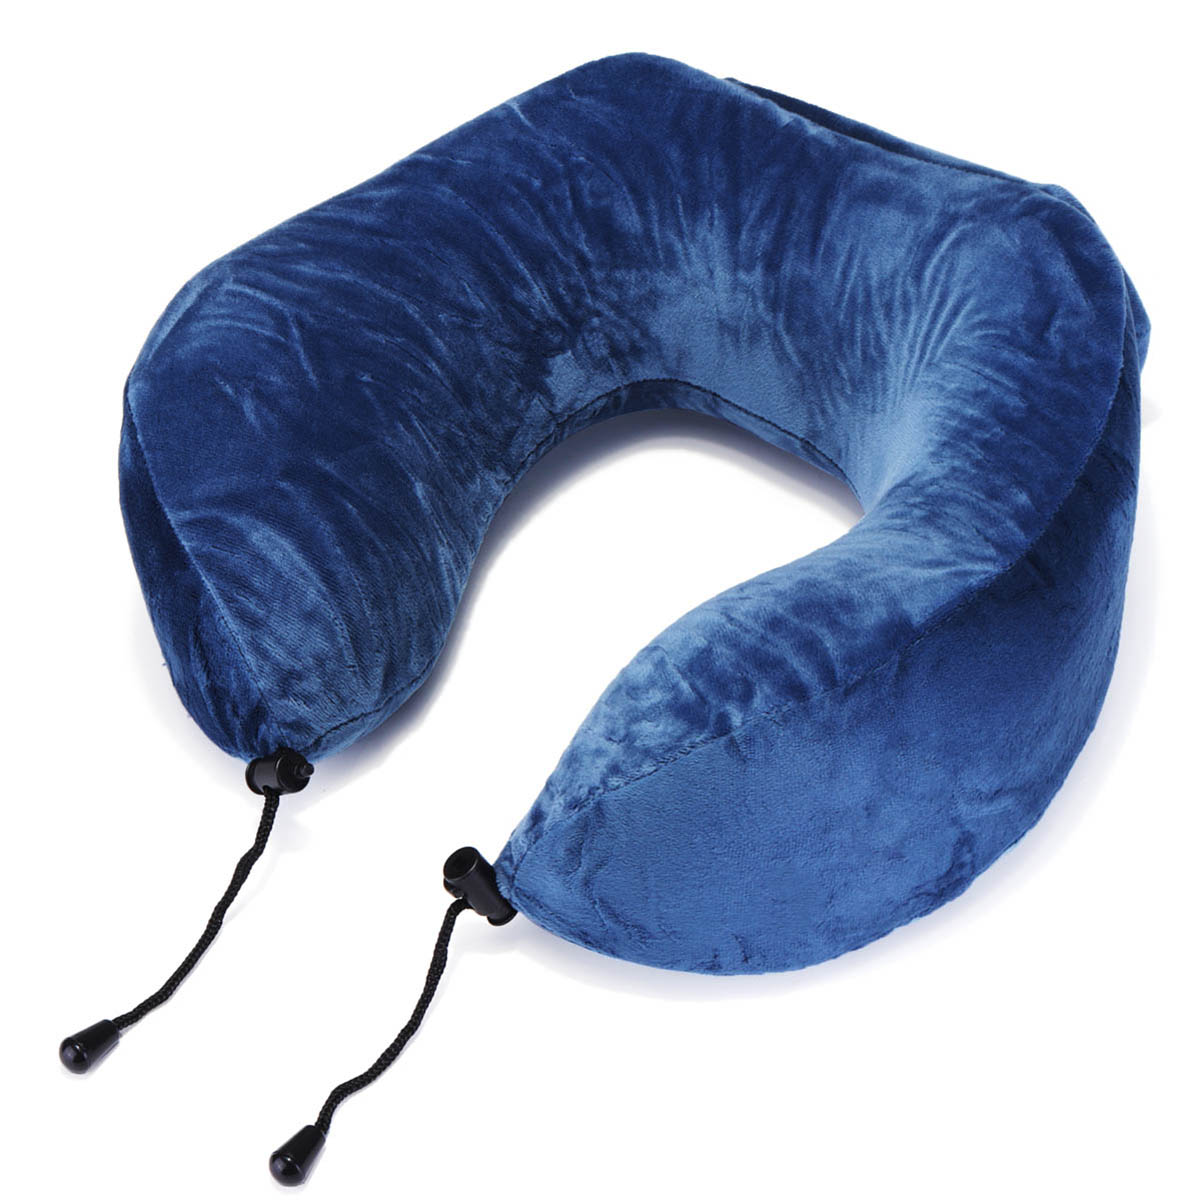 

Honana синий Slow Rebound Memory Хлопок Comfortable Шея Подушка U Тип Подушка для хранения подушек